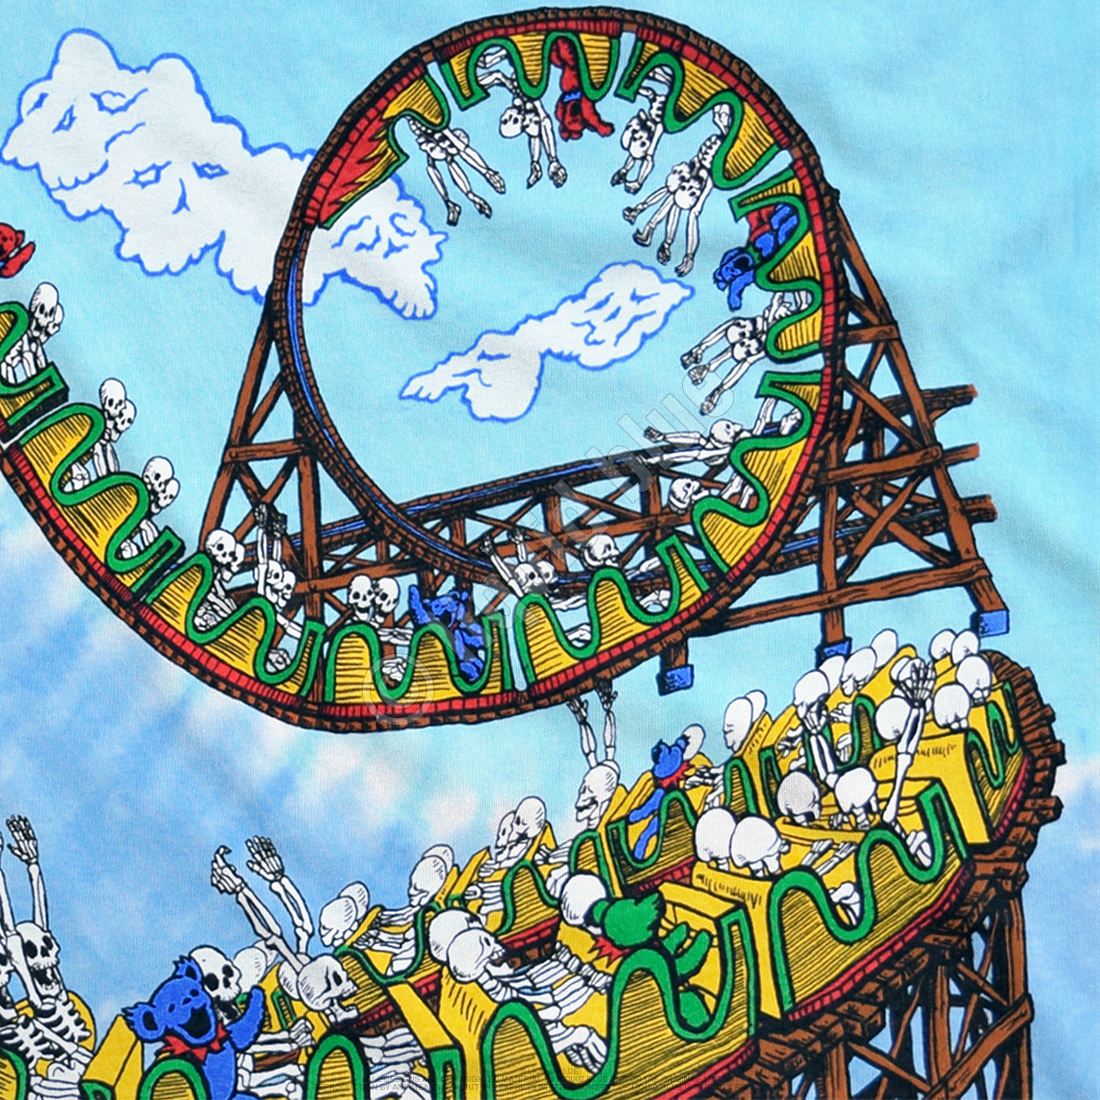 Mtr Libertyland Amusement Park Men/Unisex T-Shirt Brown / L